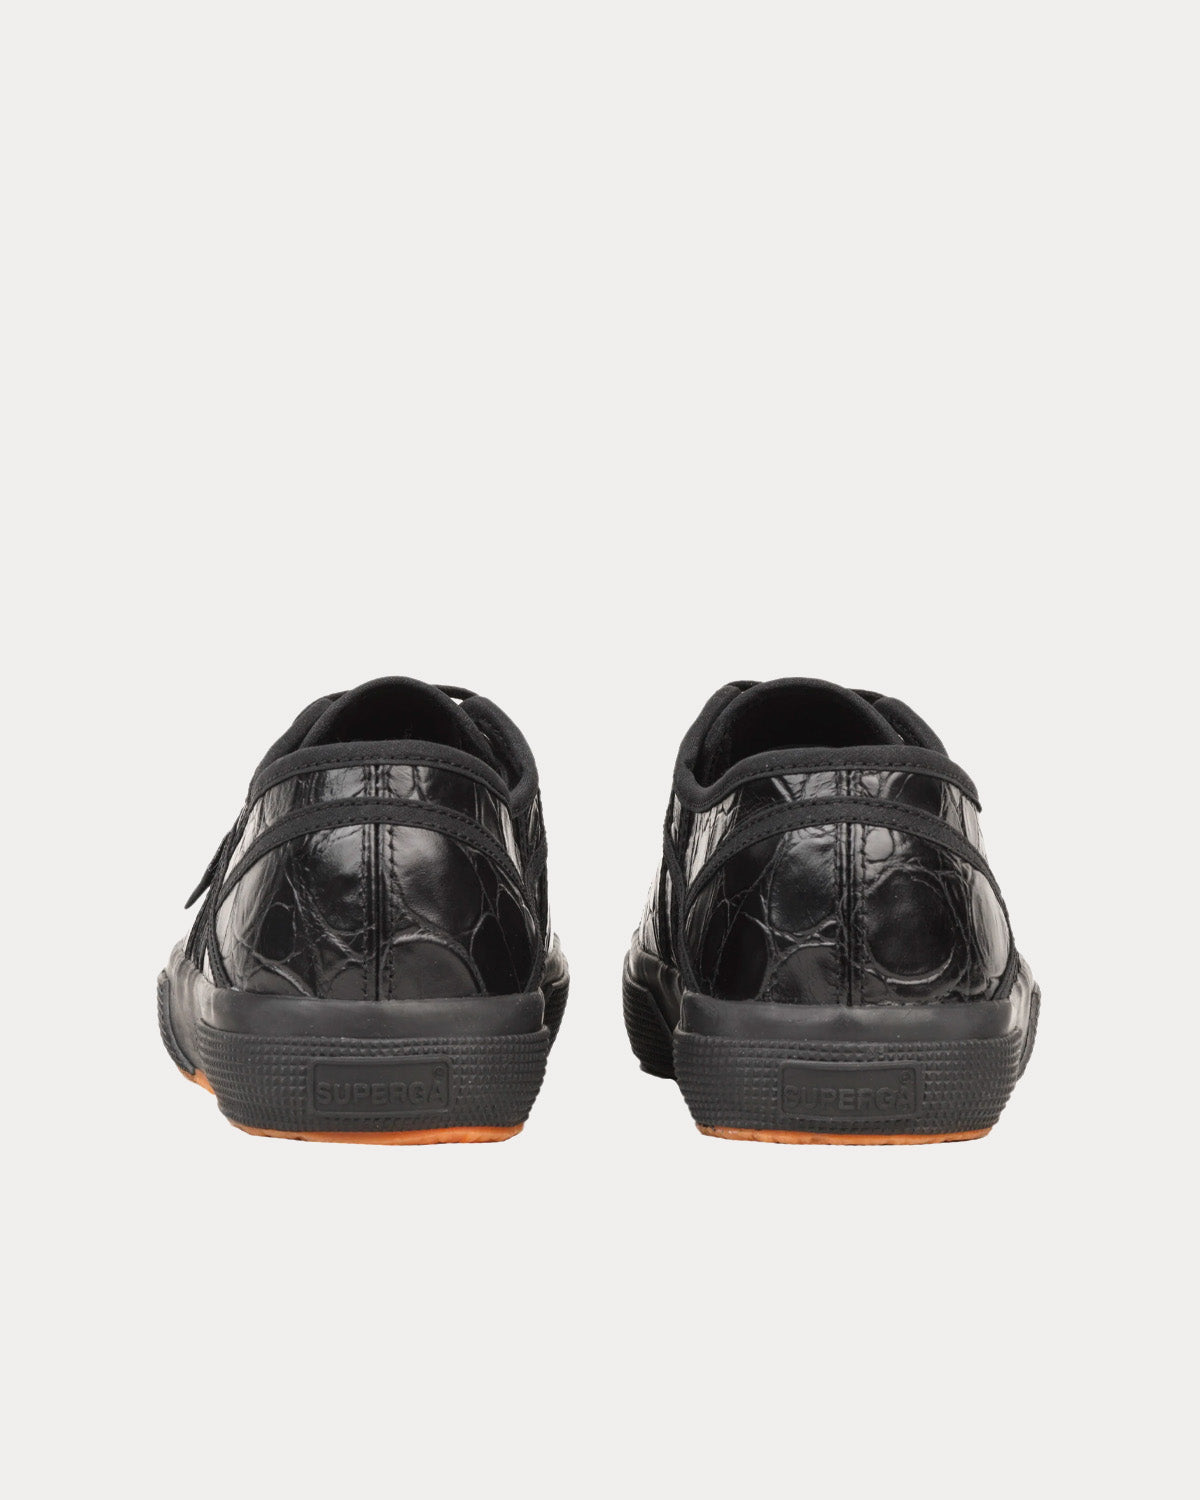 Alaïa x Superga - Leather Black Low Top Sneakers